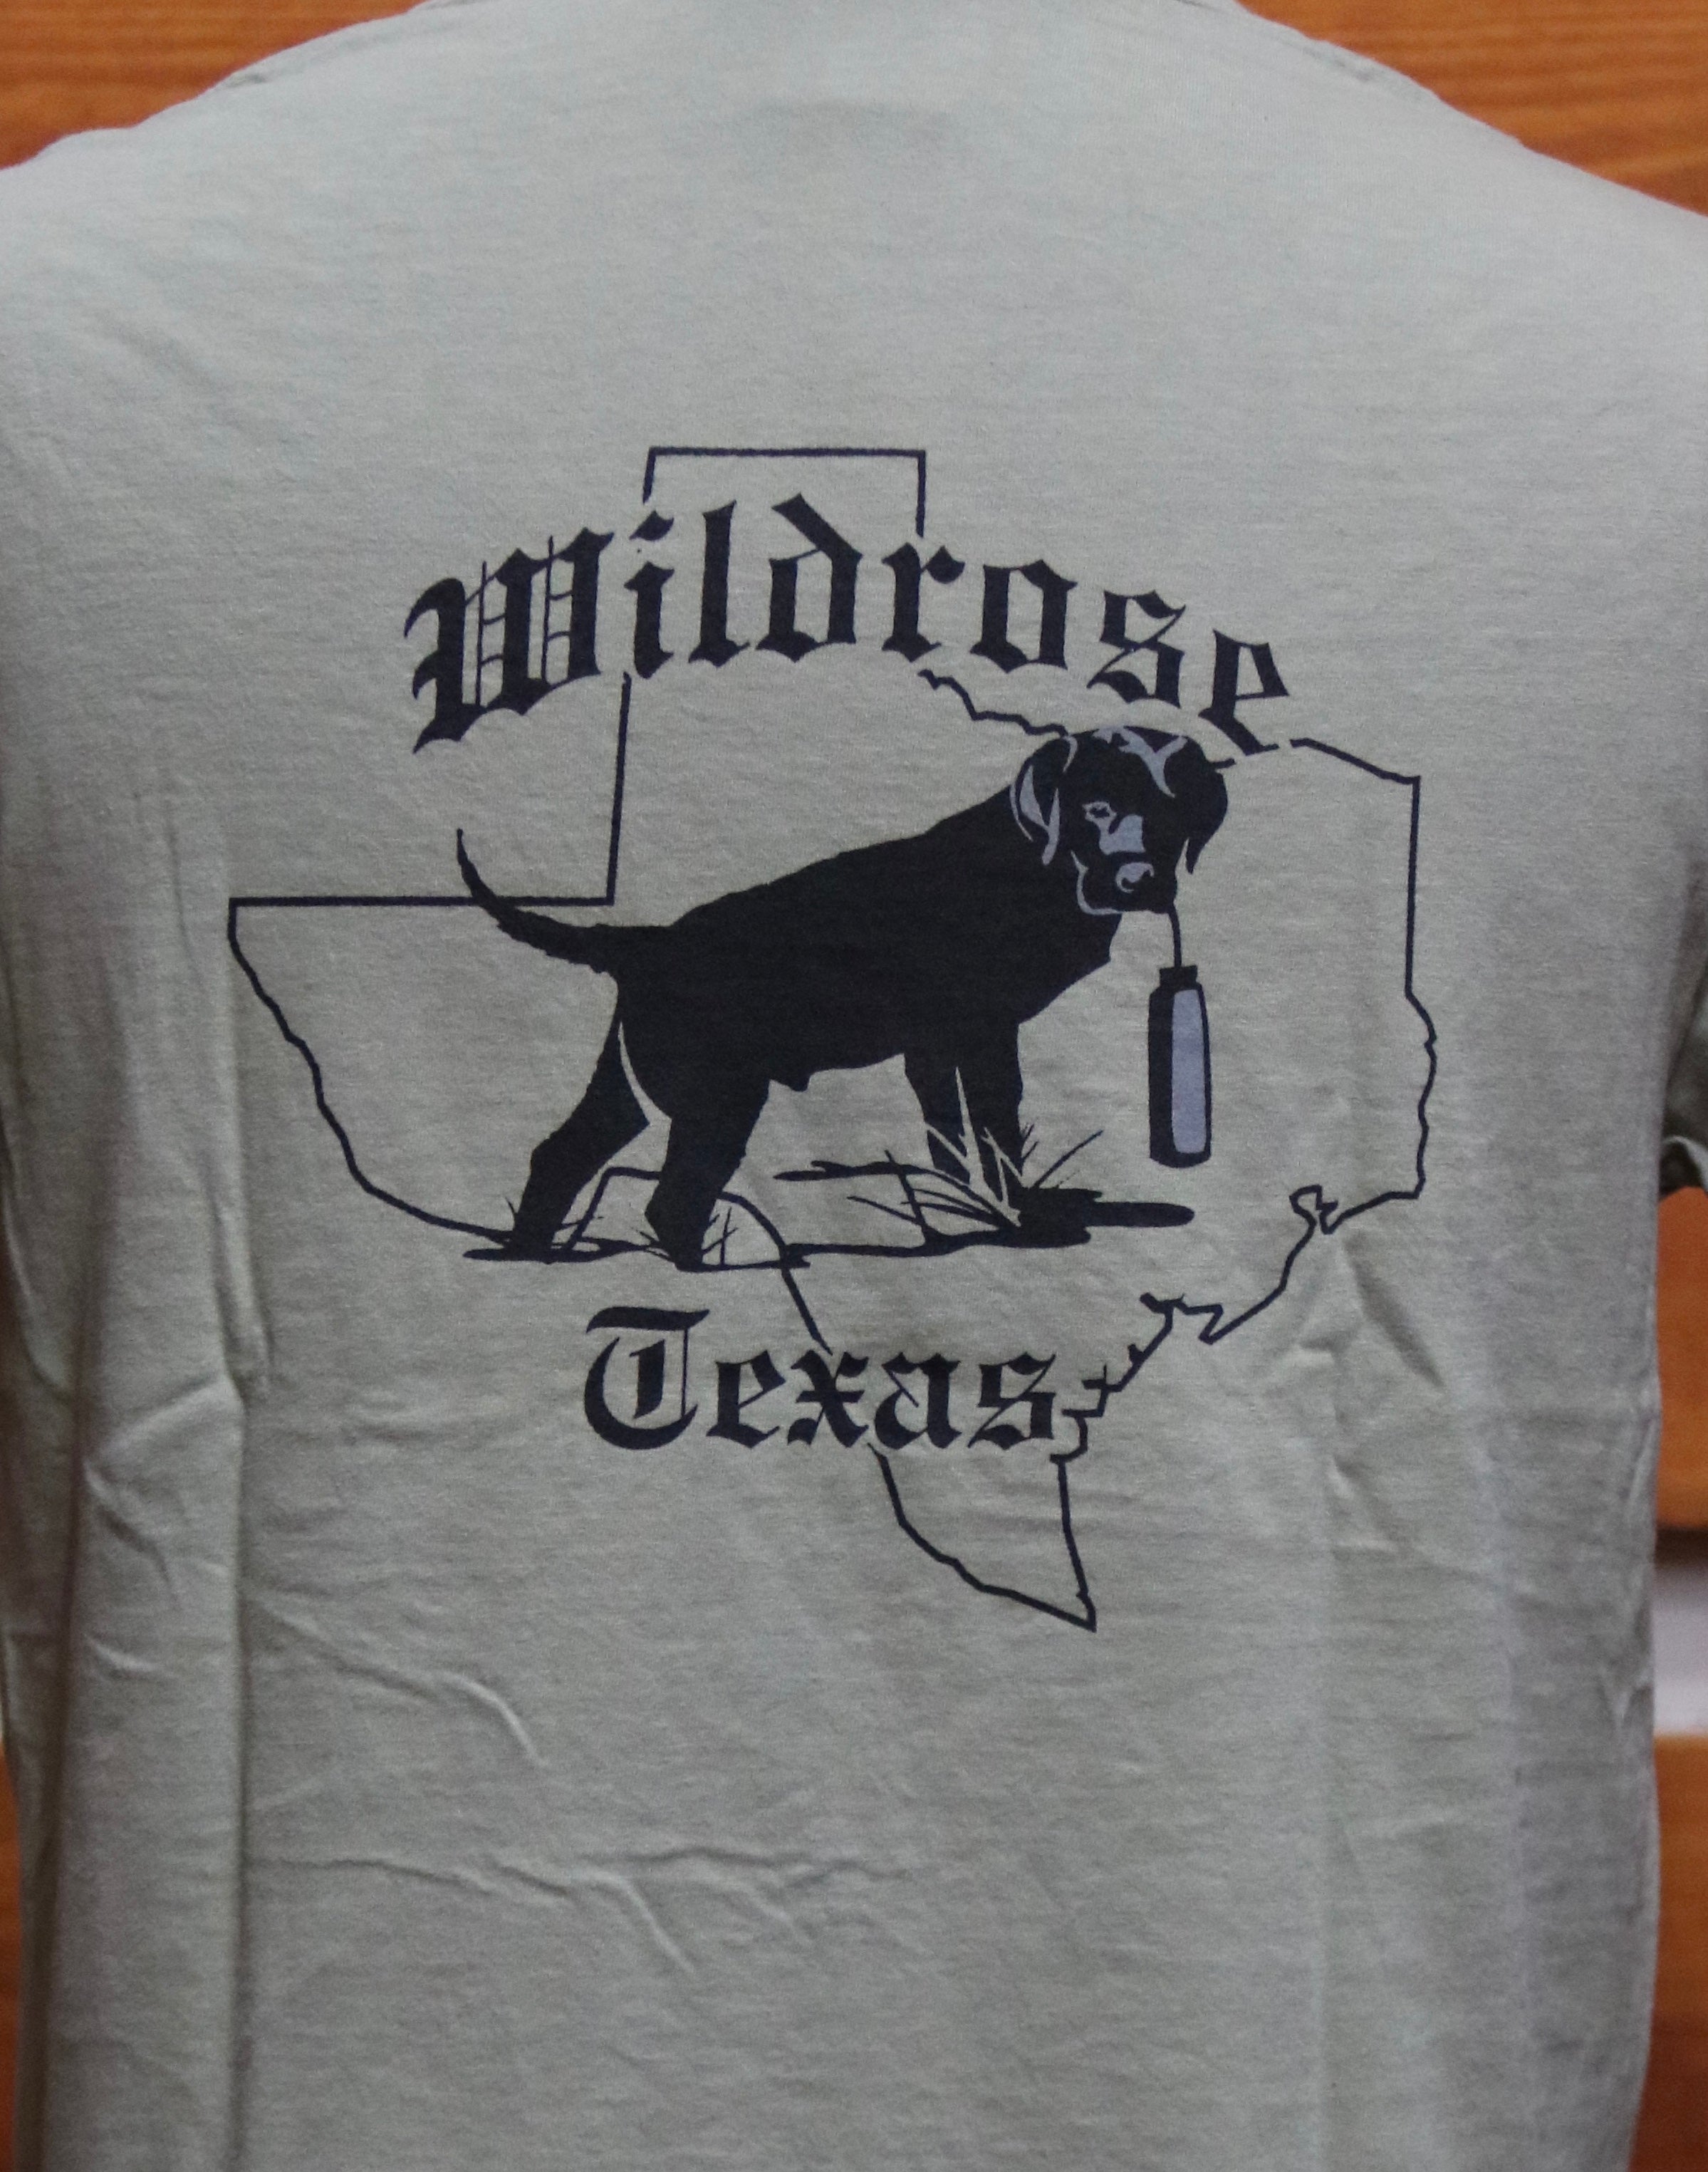 Wildrose Texas T-Shirt: short sleeve